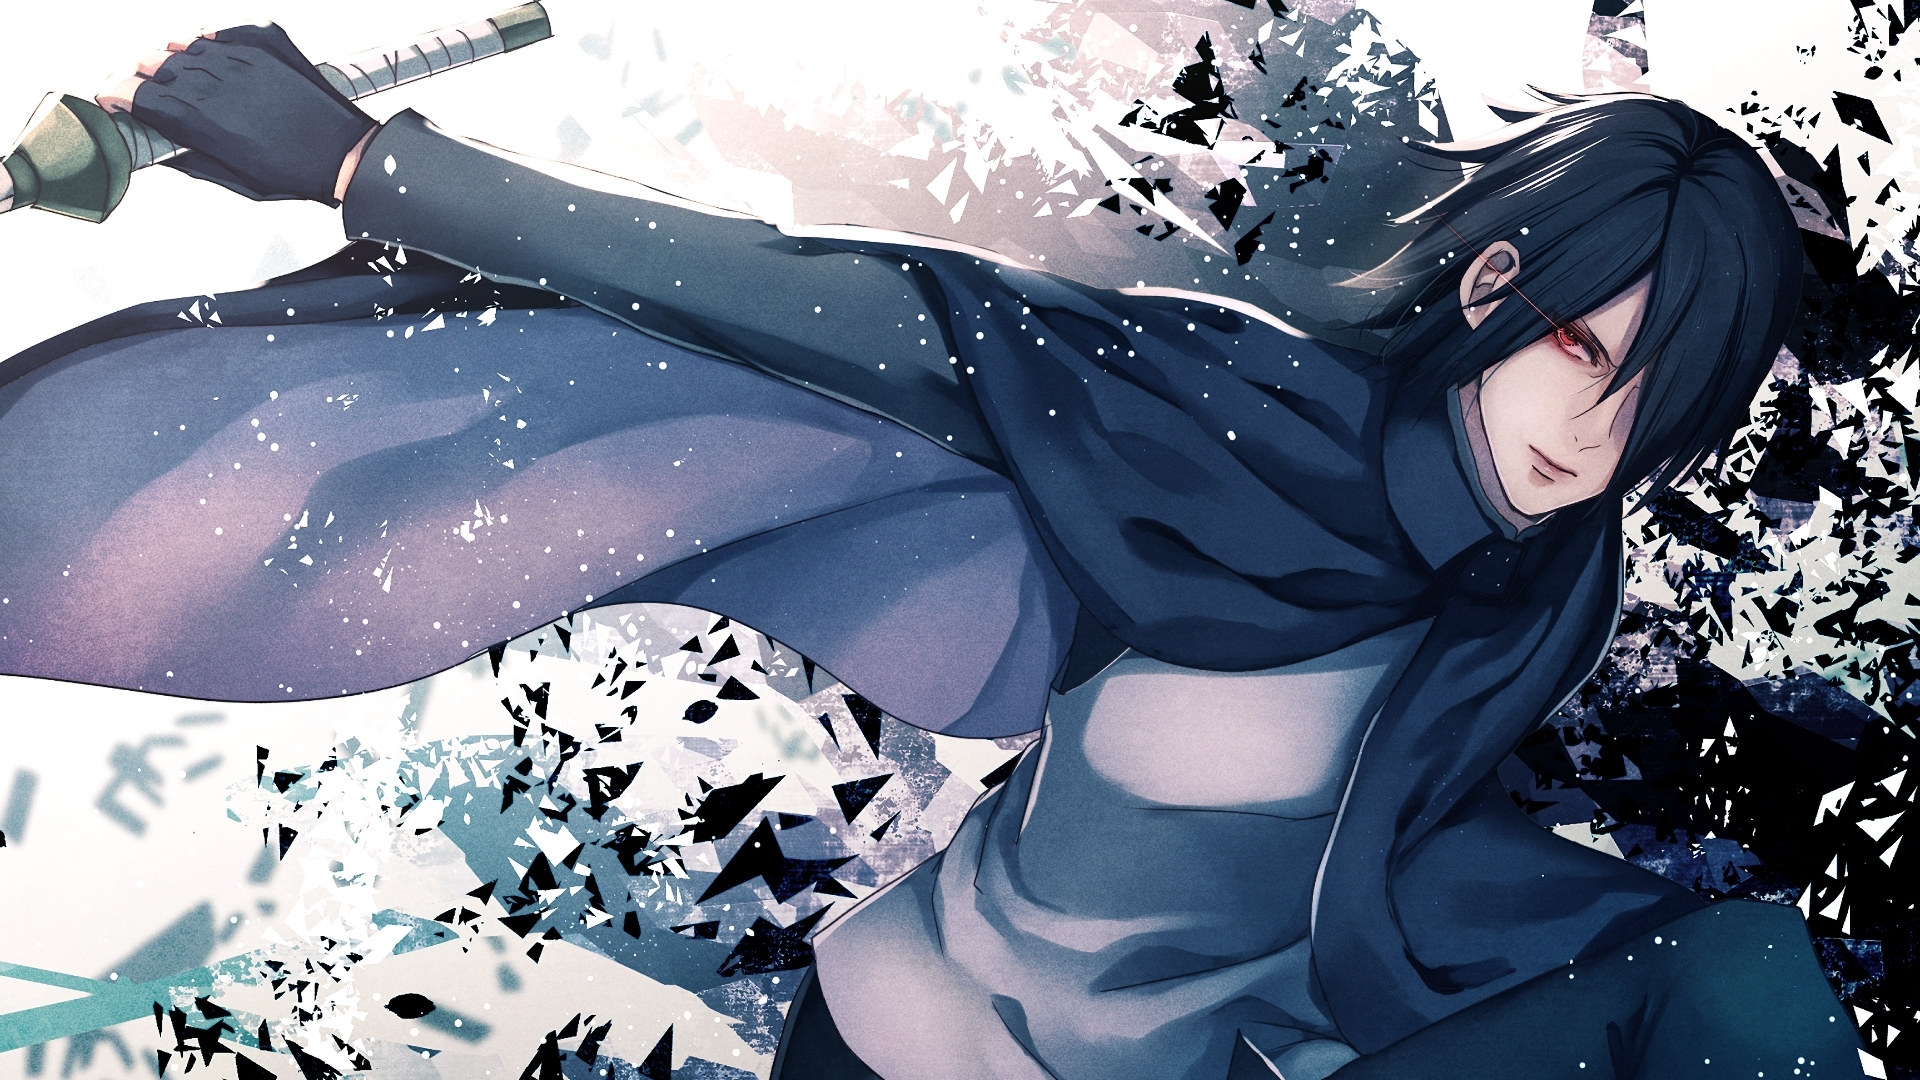 sasuke wallpaper hd,schwarzes haar,cg kunstwerk,anime,karikatur,illustration